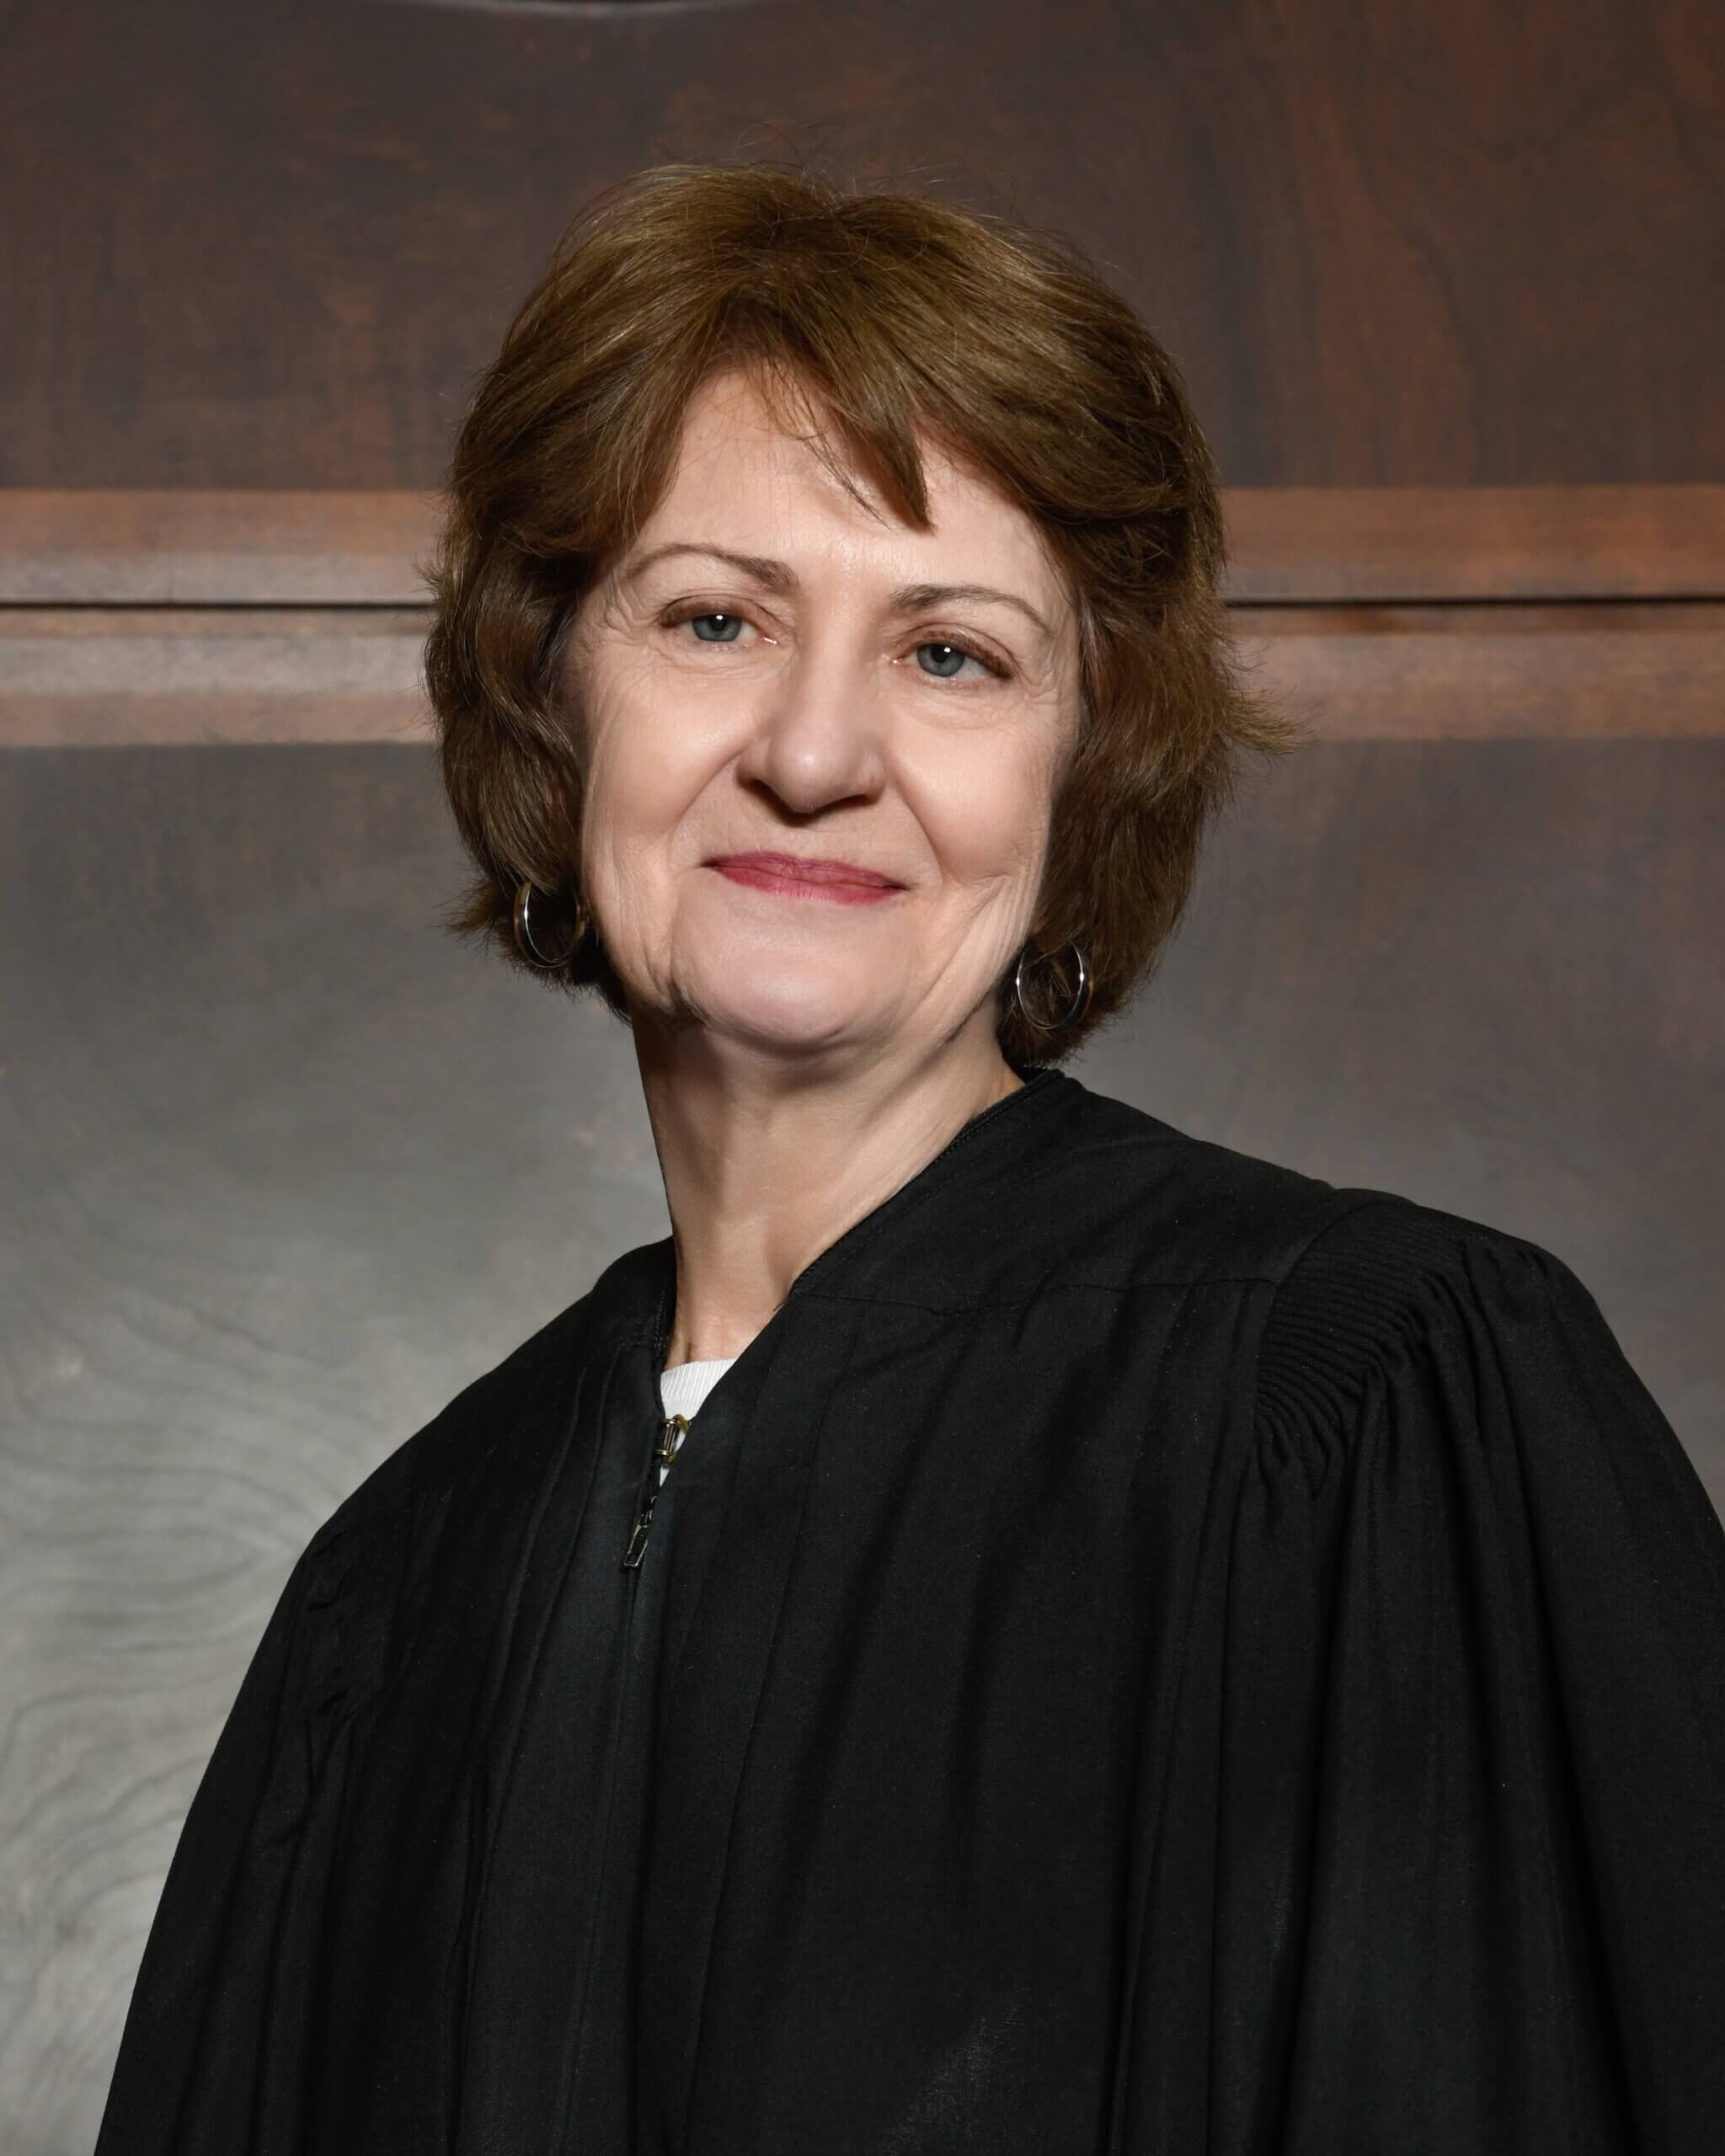 Judge Joan Humphrey Lefkow